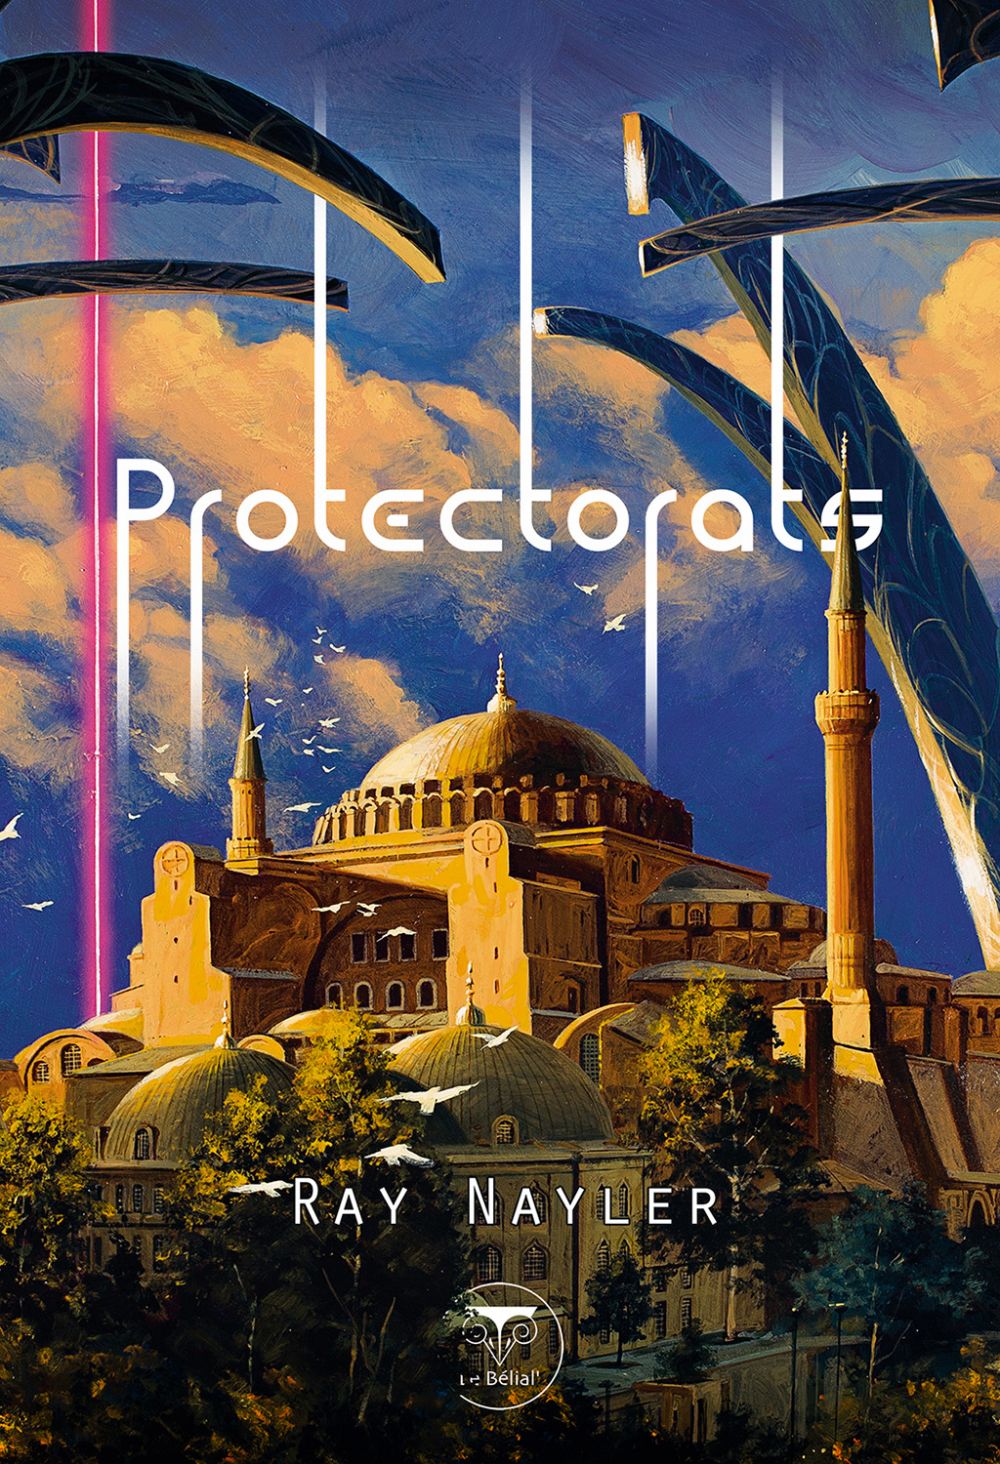 Couverture de "Protectorats" de Ray Nayler Hypermondes 31